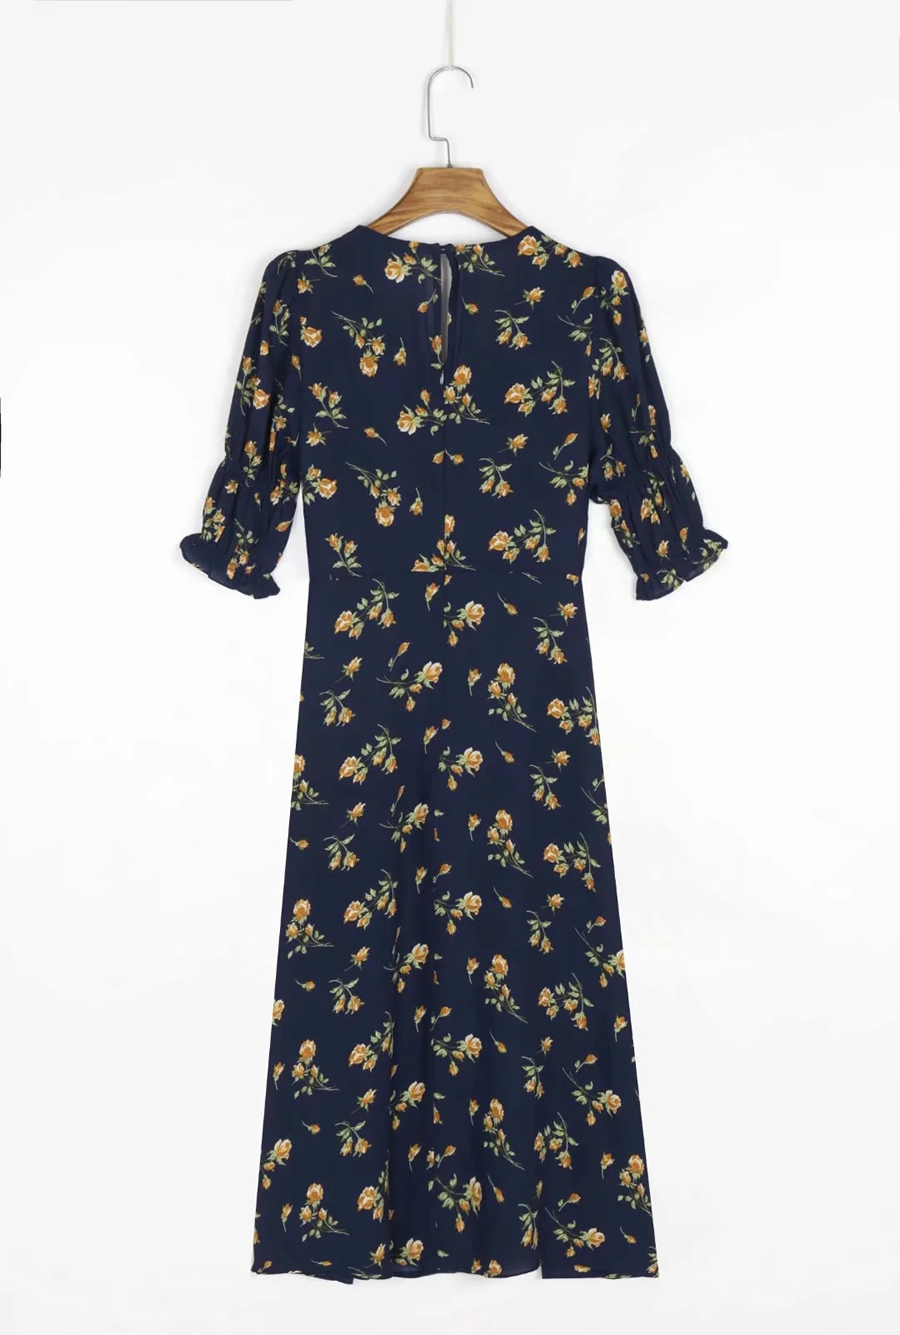 Fashion Navy Blue Floral Floral Print Split Short Sleeve Dress,Long Dress